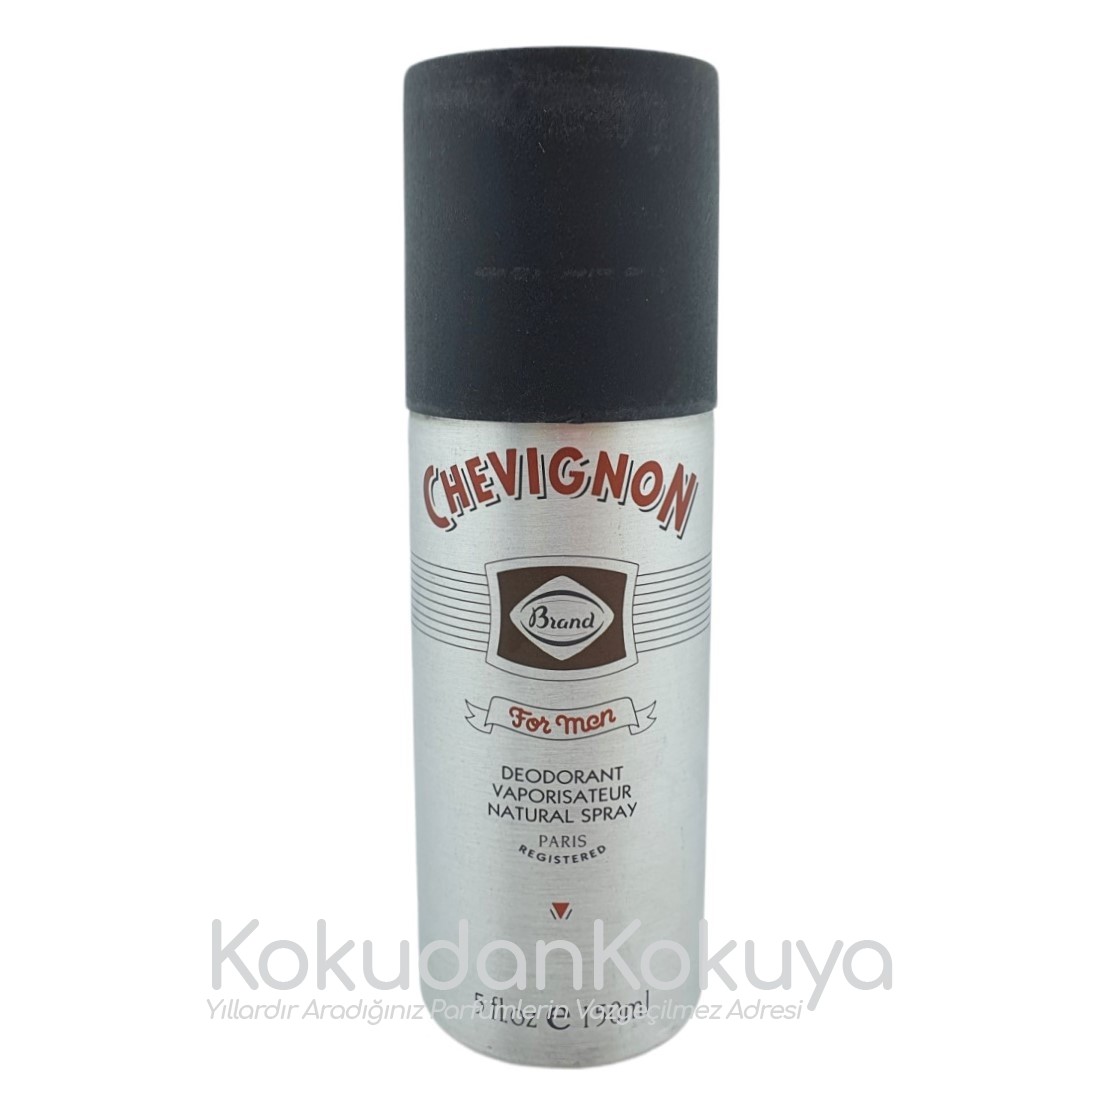 CHEVIGNON Brand for Men (Vintage) Deodorant Erkek 150ml Deodorant Spray (Metal) 